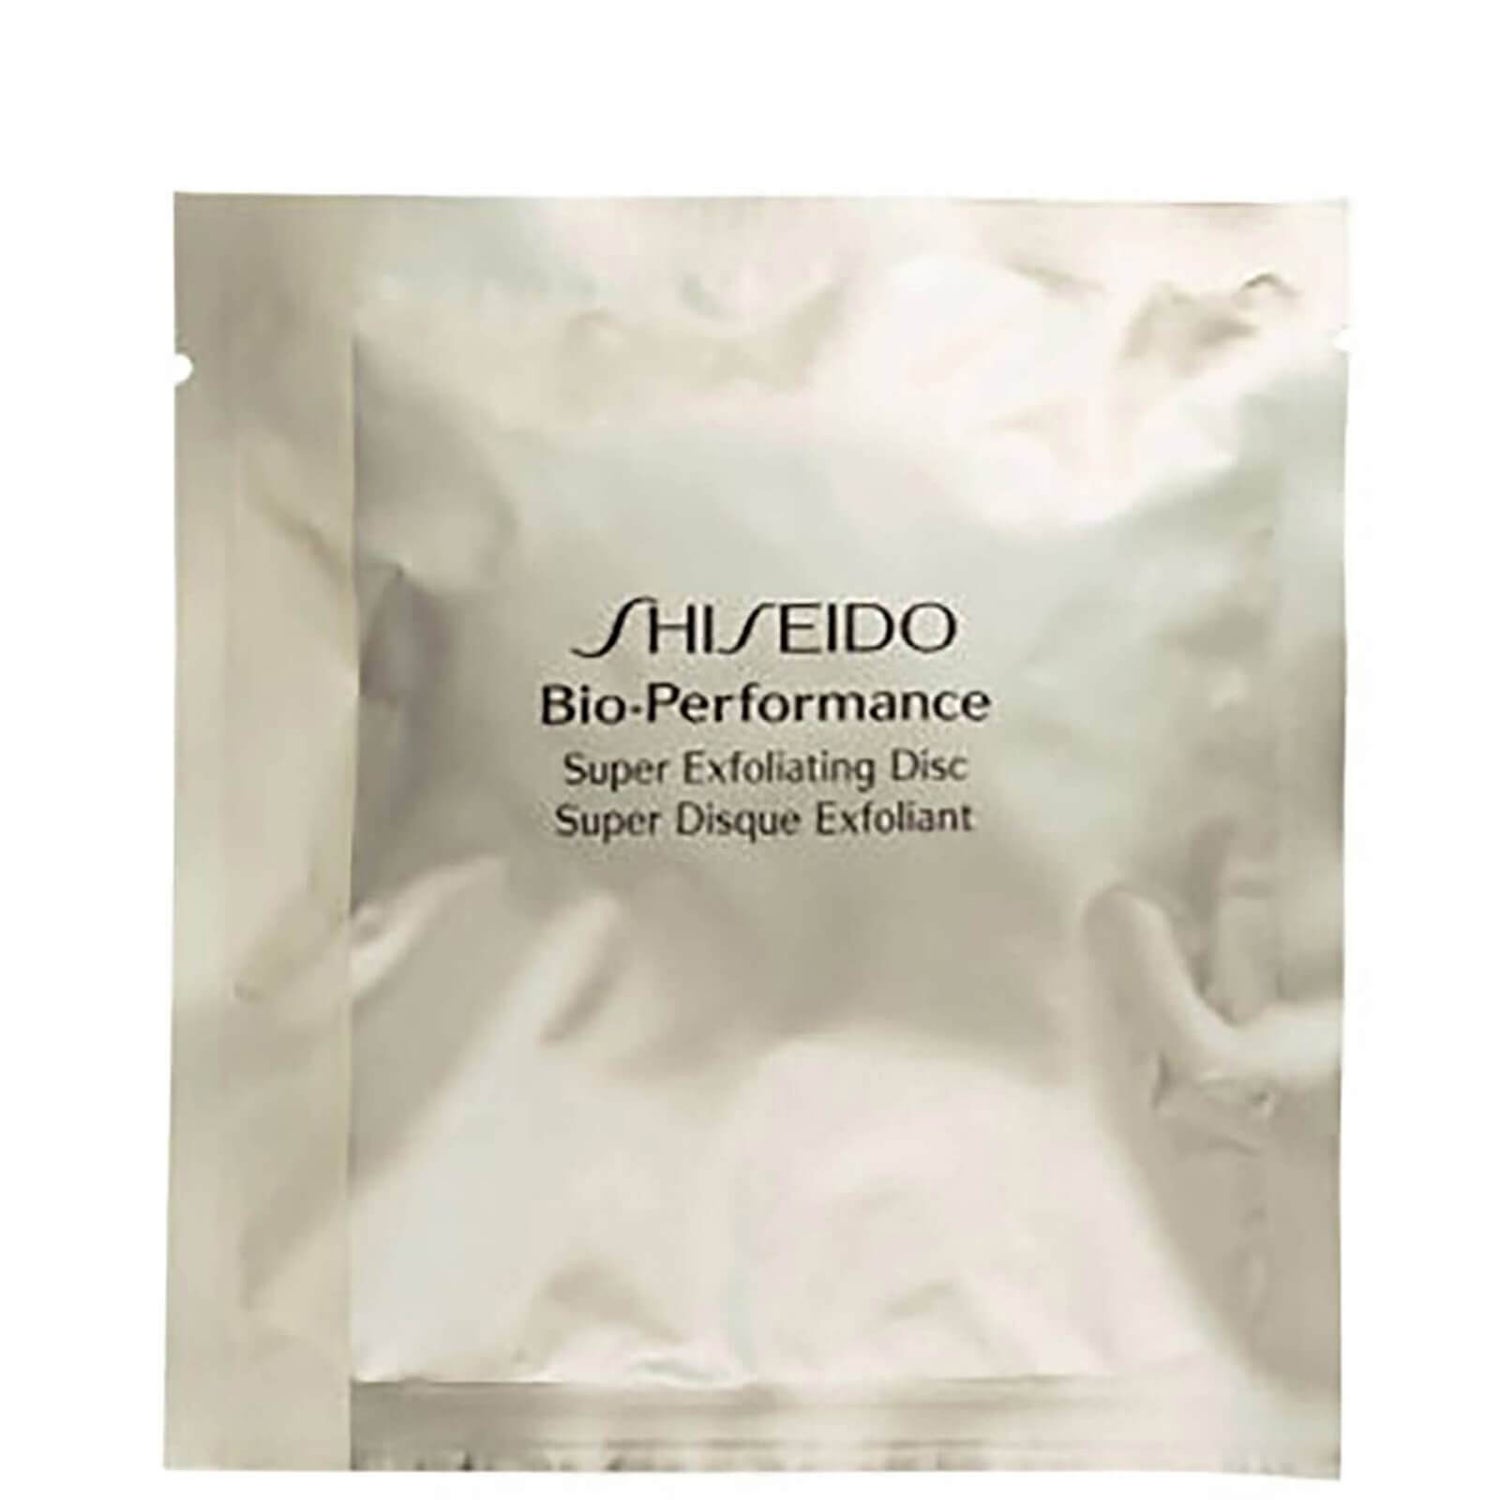 Shiseido BioPerformance Super Exfoliating Discs x 8